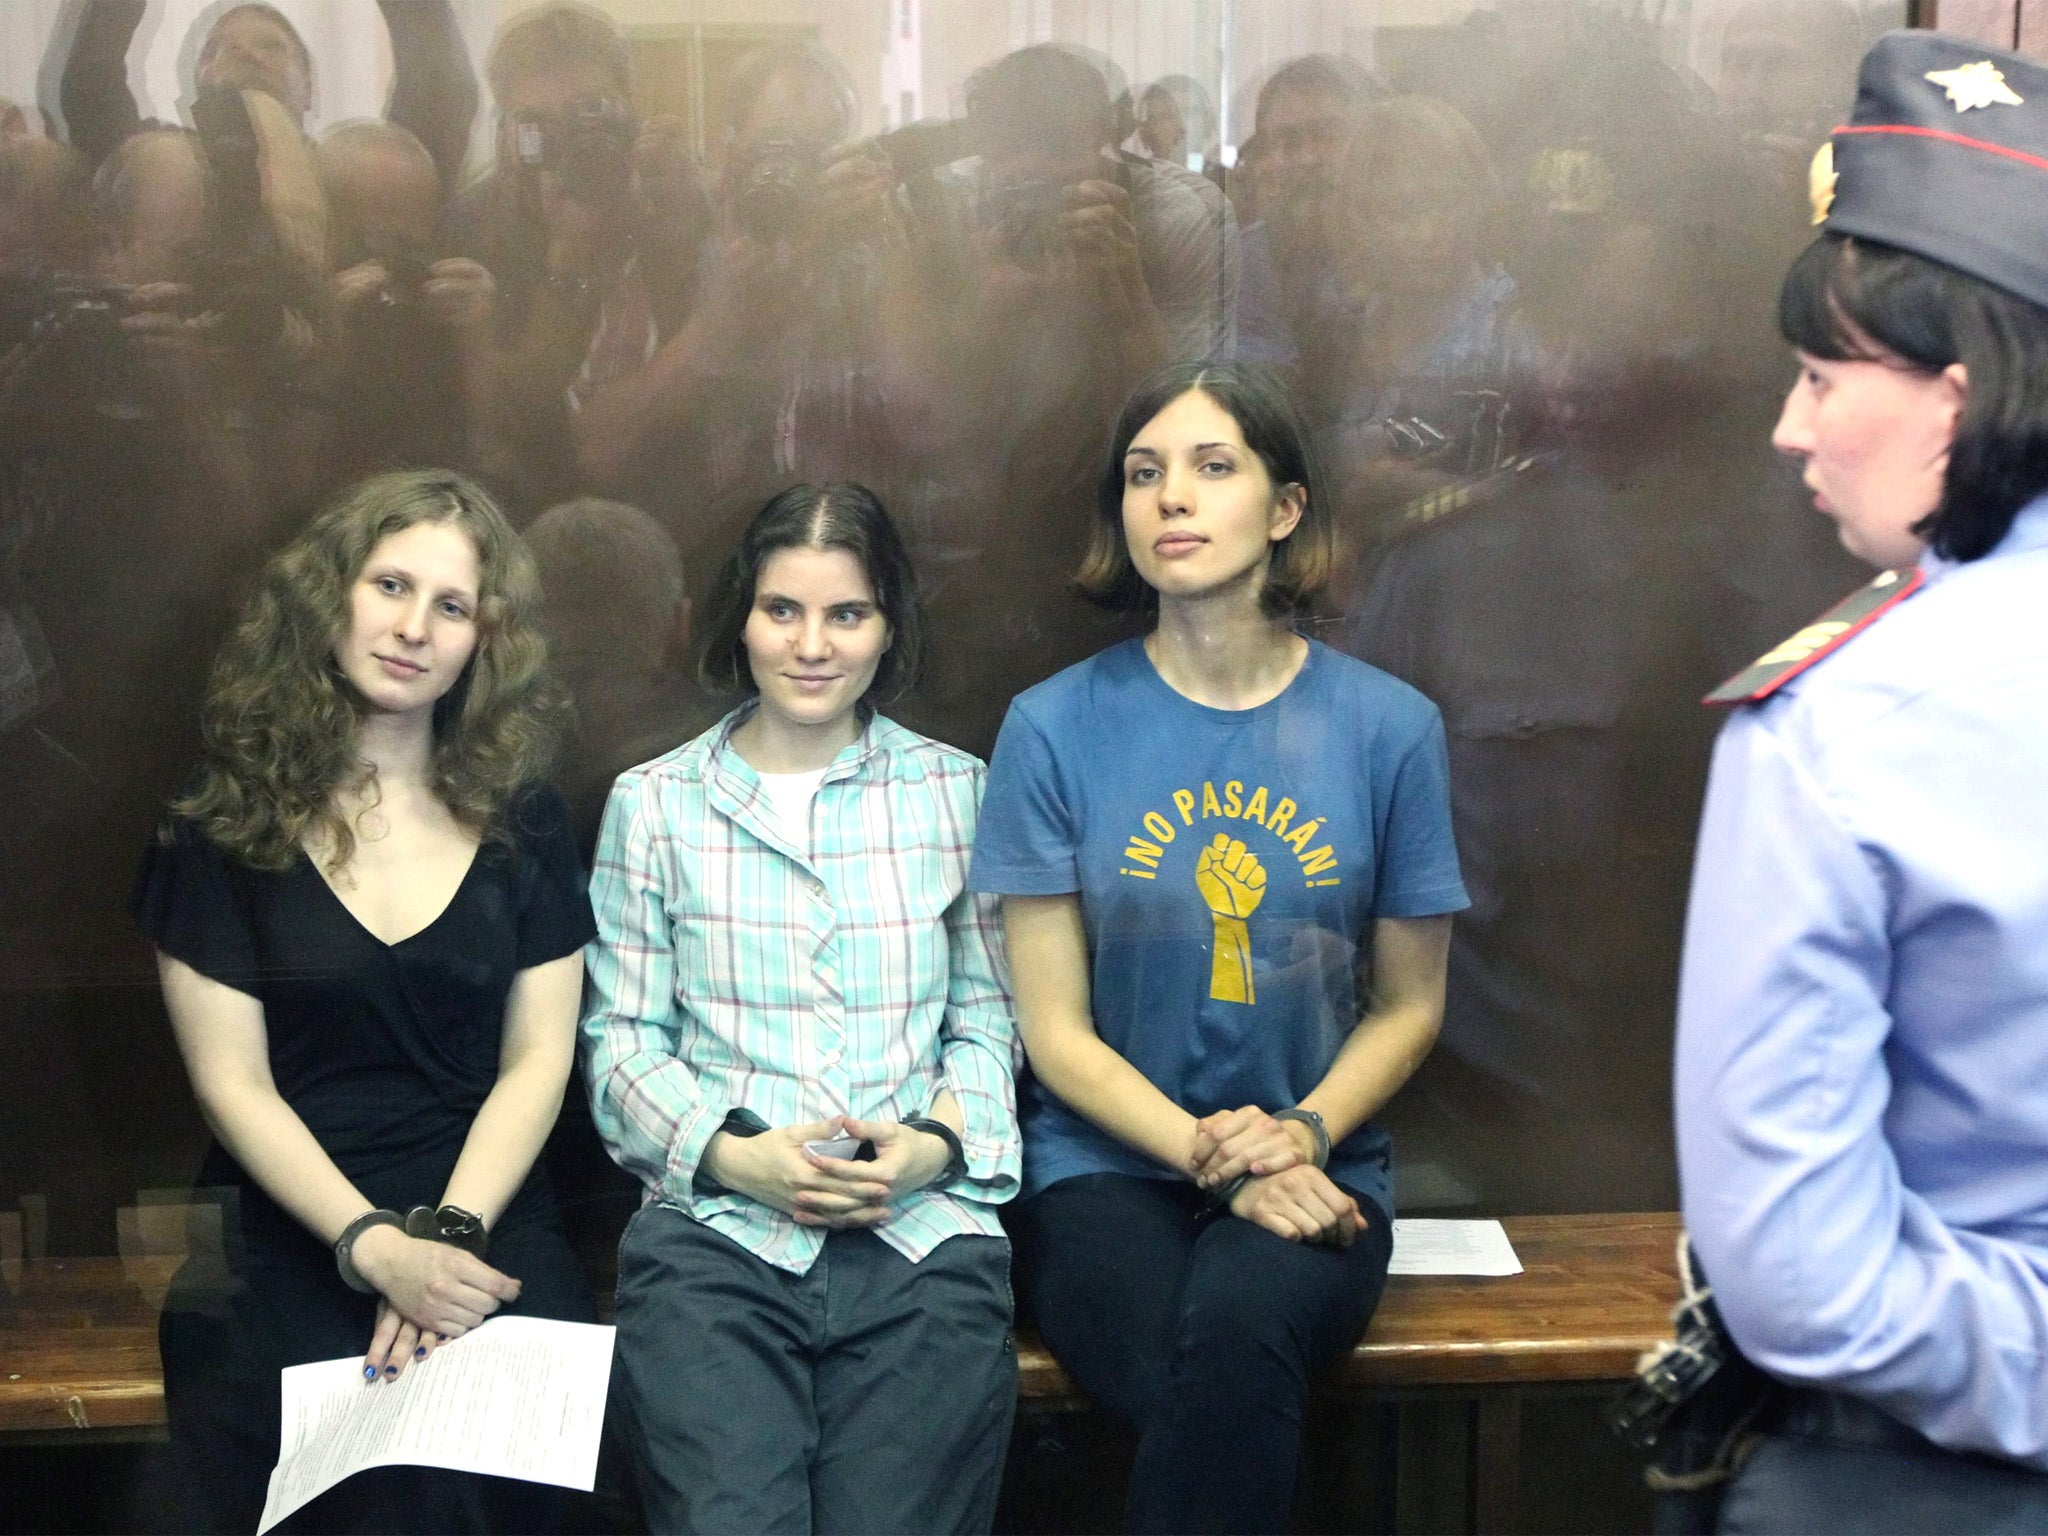 Maria Alekhina, Ekaterina Samutsevich and Nadezhda Tolokonnikova in court in 2012